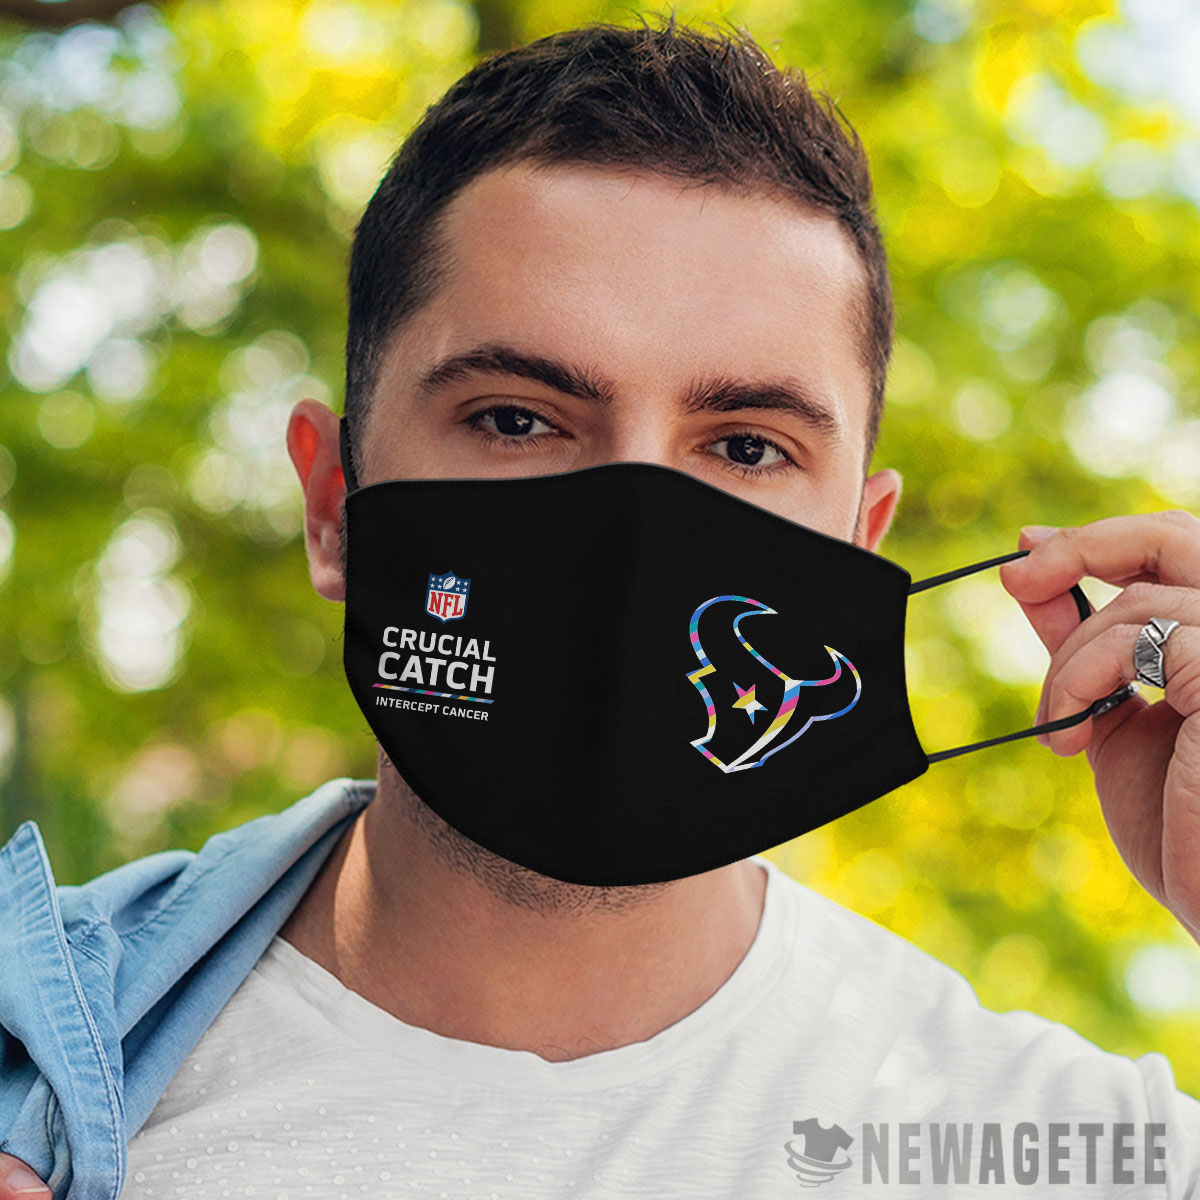 Houston Texans Nfl Crucial Catch Multicolor Face Mask Cloth Reusable